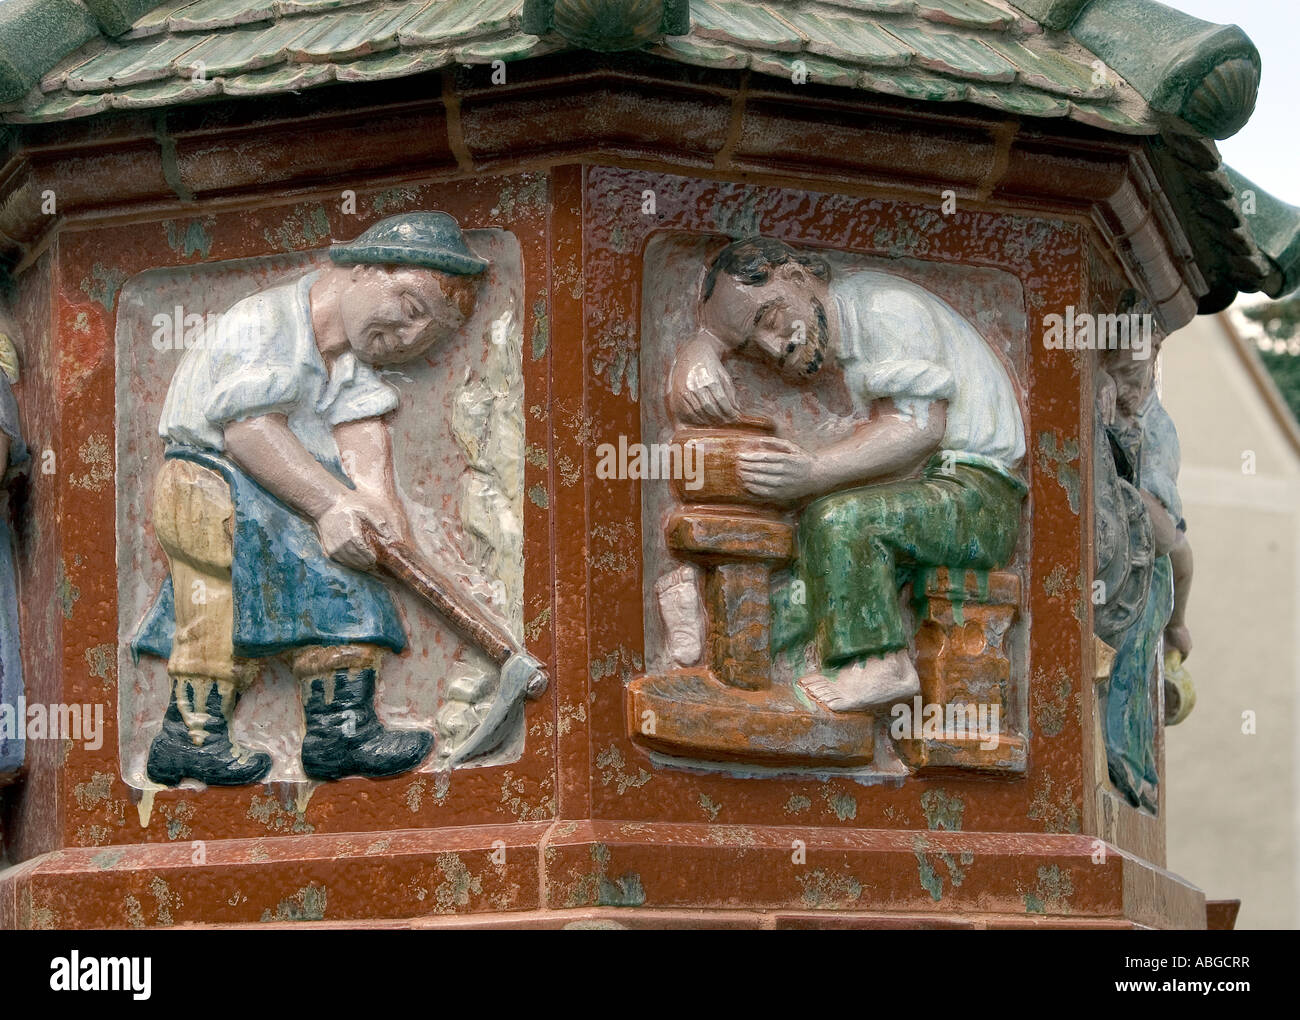 Detail, Toepferbrunnen (potter's fountain), Kohren-Sahlis, Saxony, Germany Stock Photo